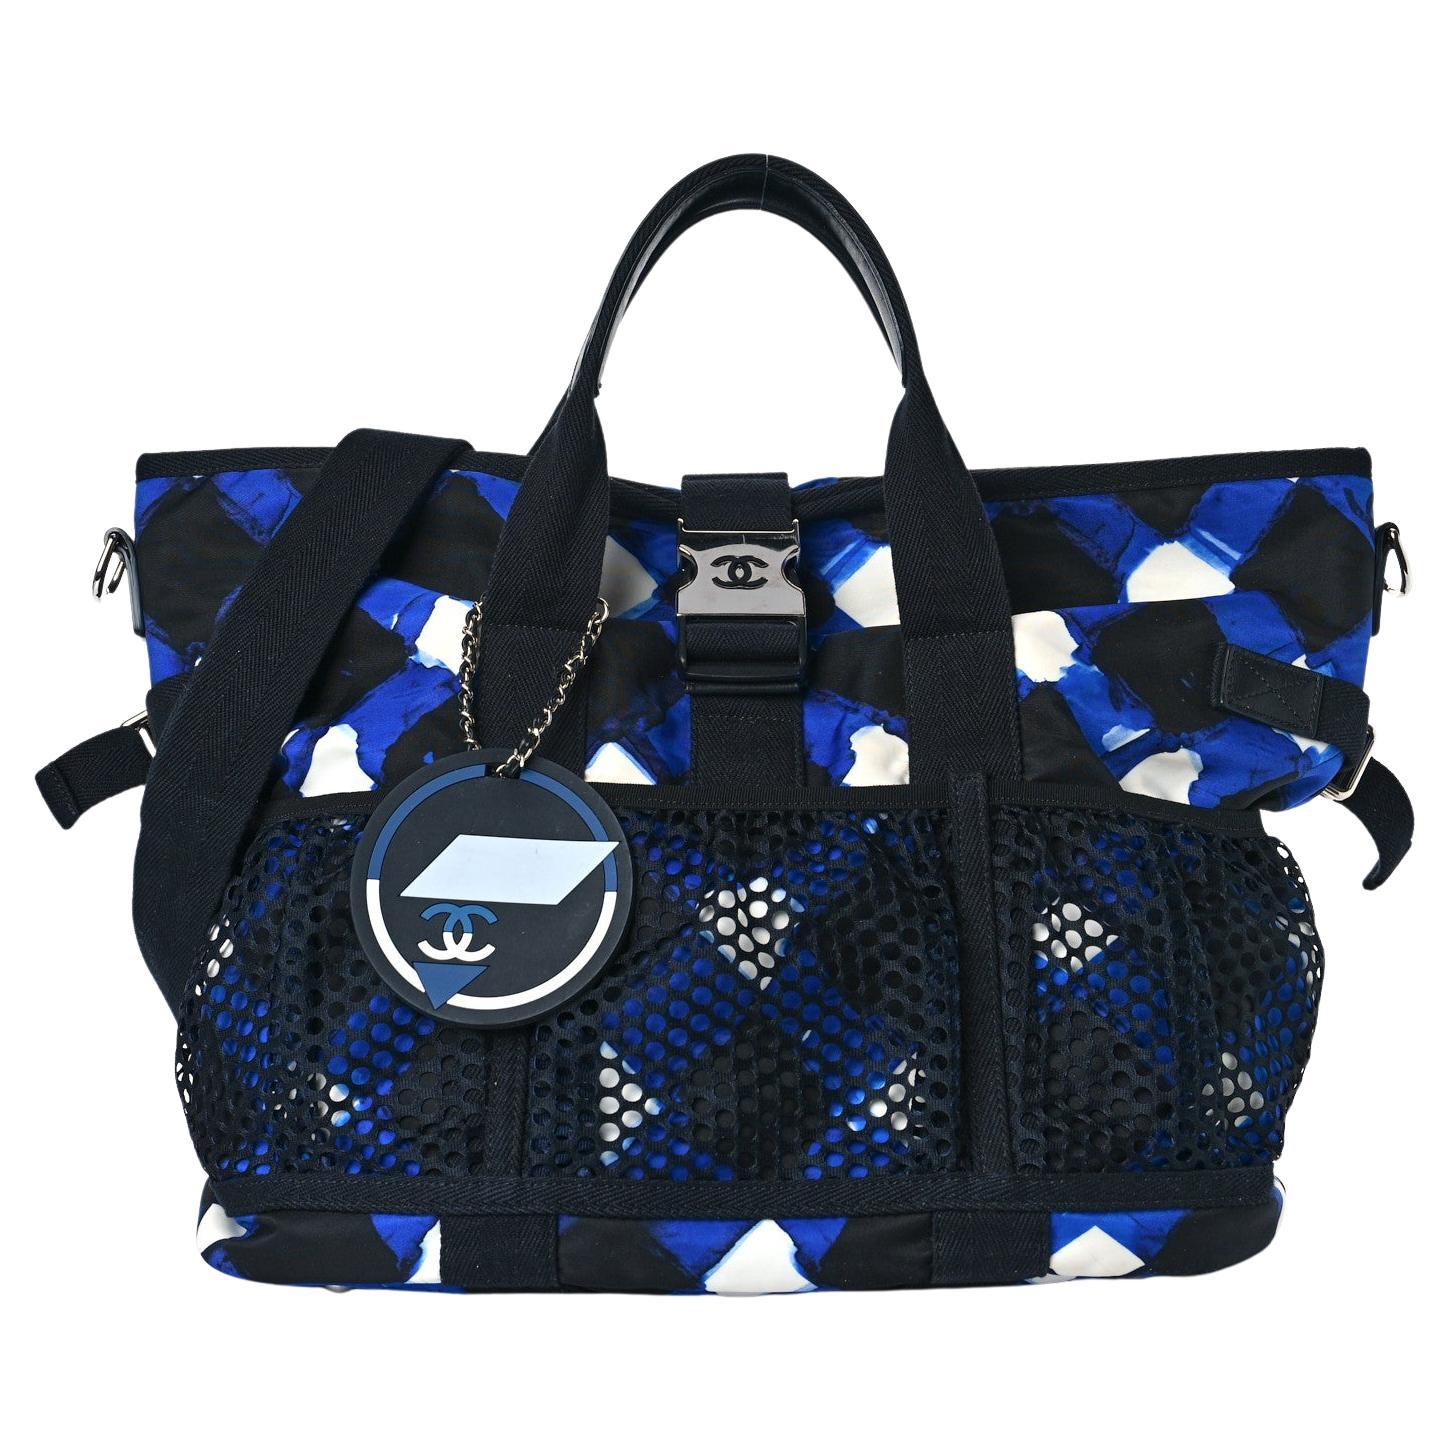 Chanel 2016 Blue Nylon Tweed Travel Carry On Blue Diamond Print Tote Bag